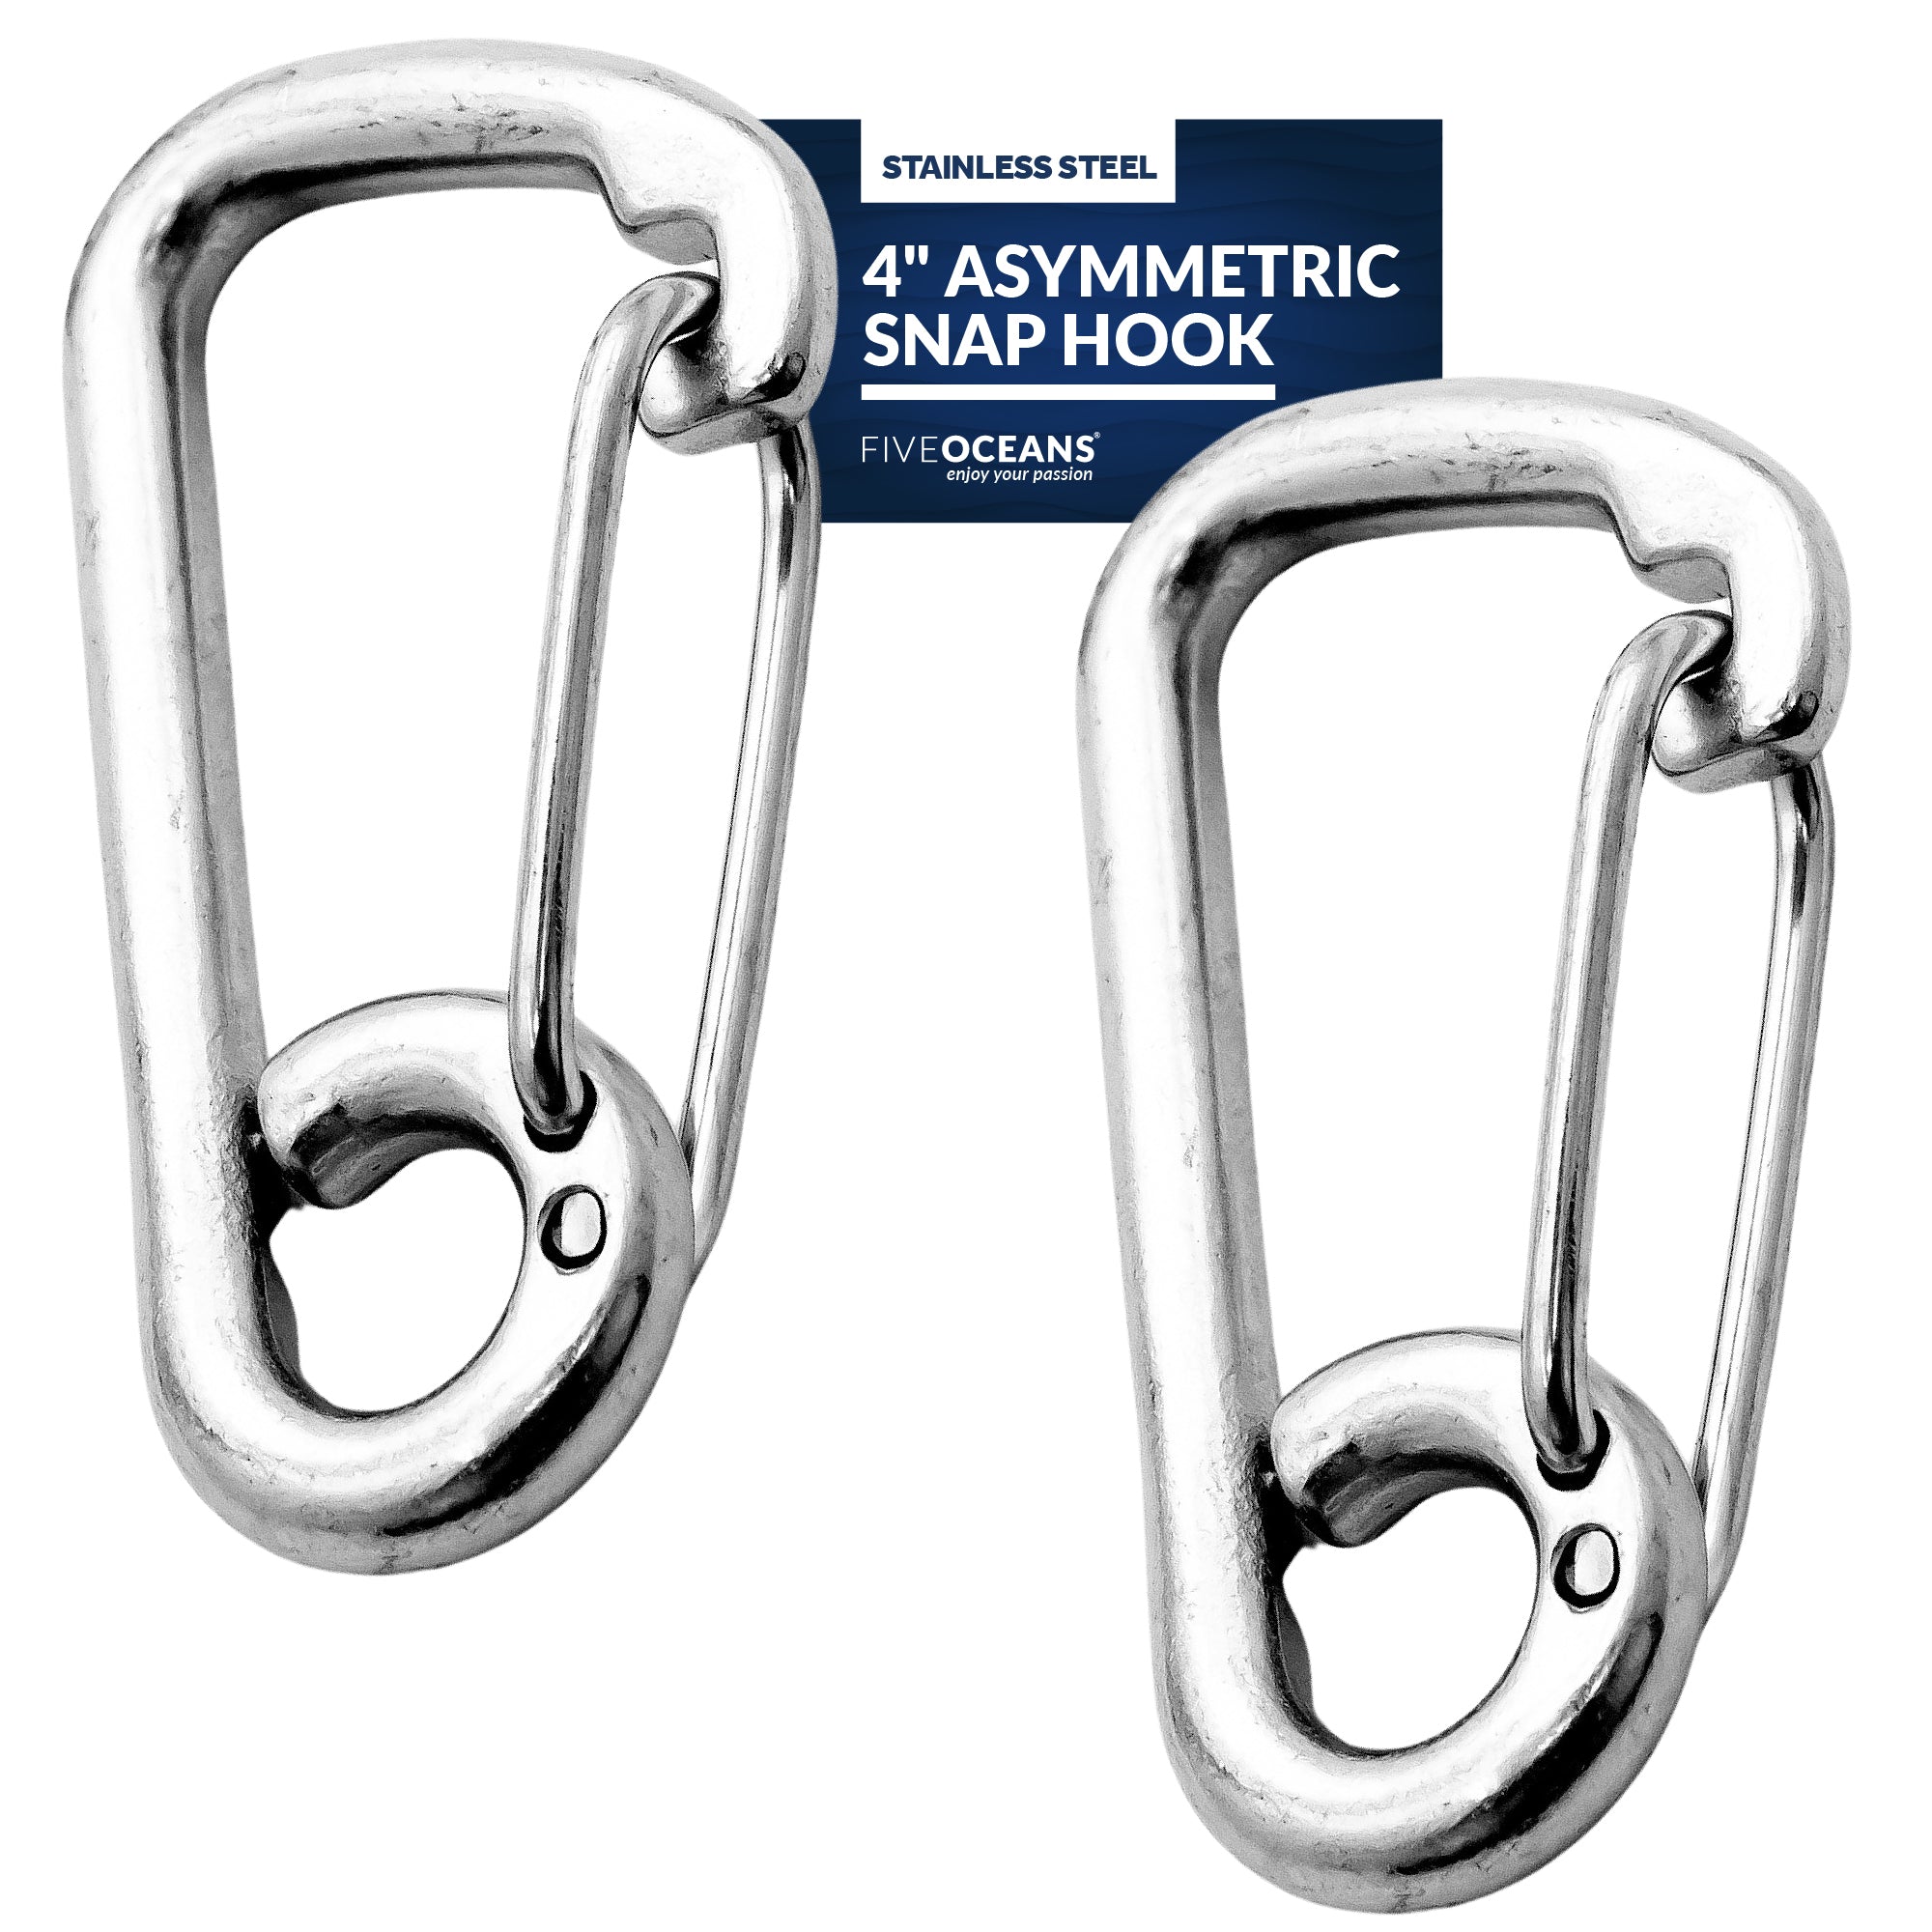 Asymmetric Snap Hook, Stainless Steel, 4" 2-Pack - FO466-M2